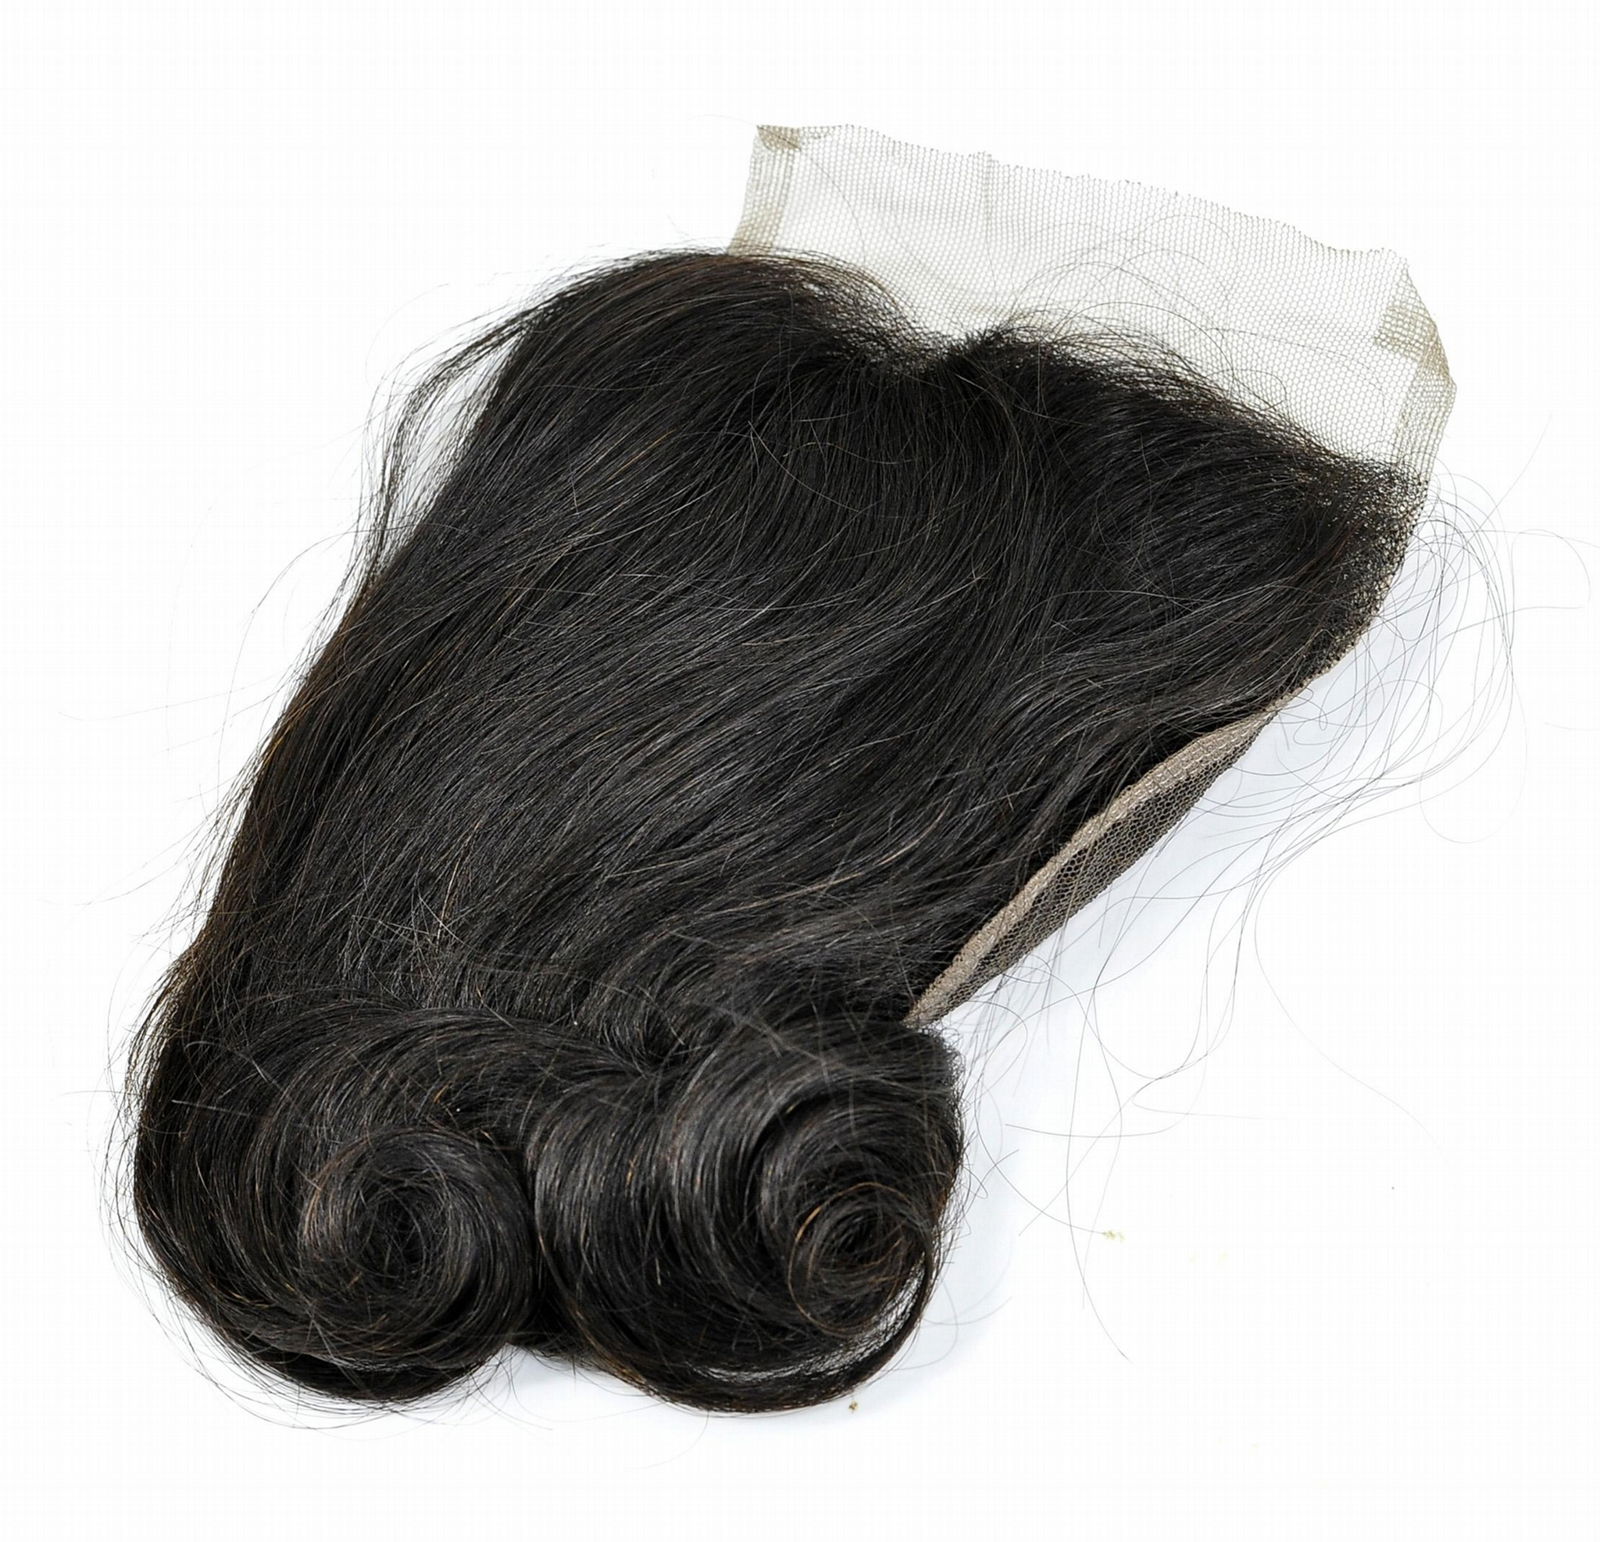 Virgin Human Hair Lace Frontal at Wholesale Price (Fumi) 2